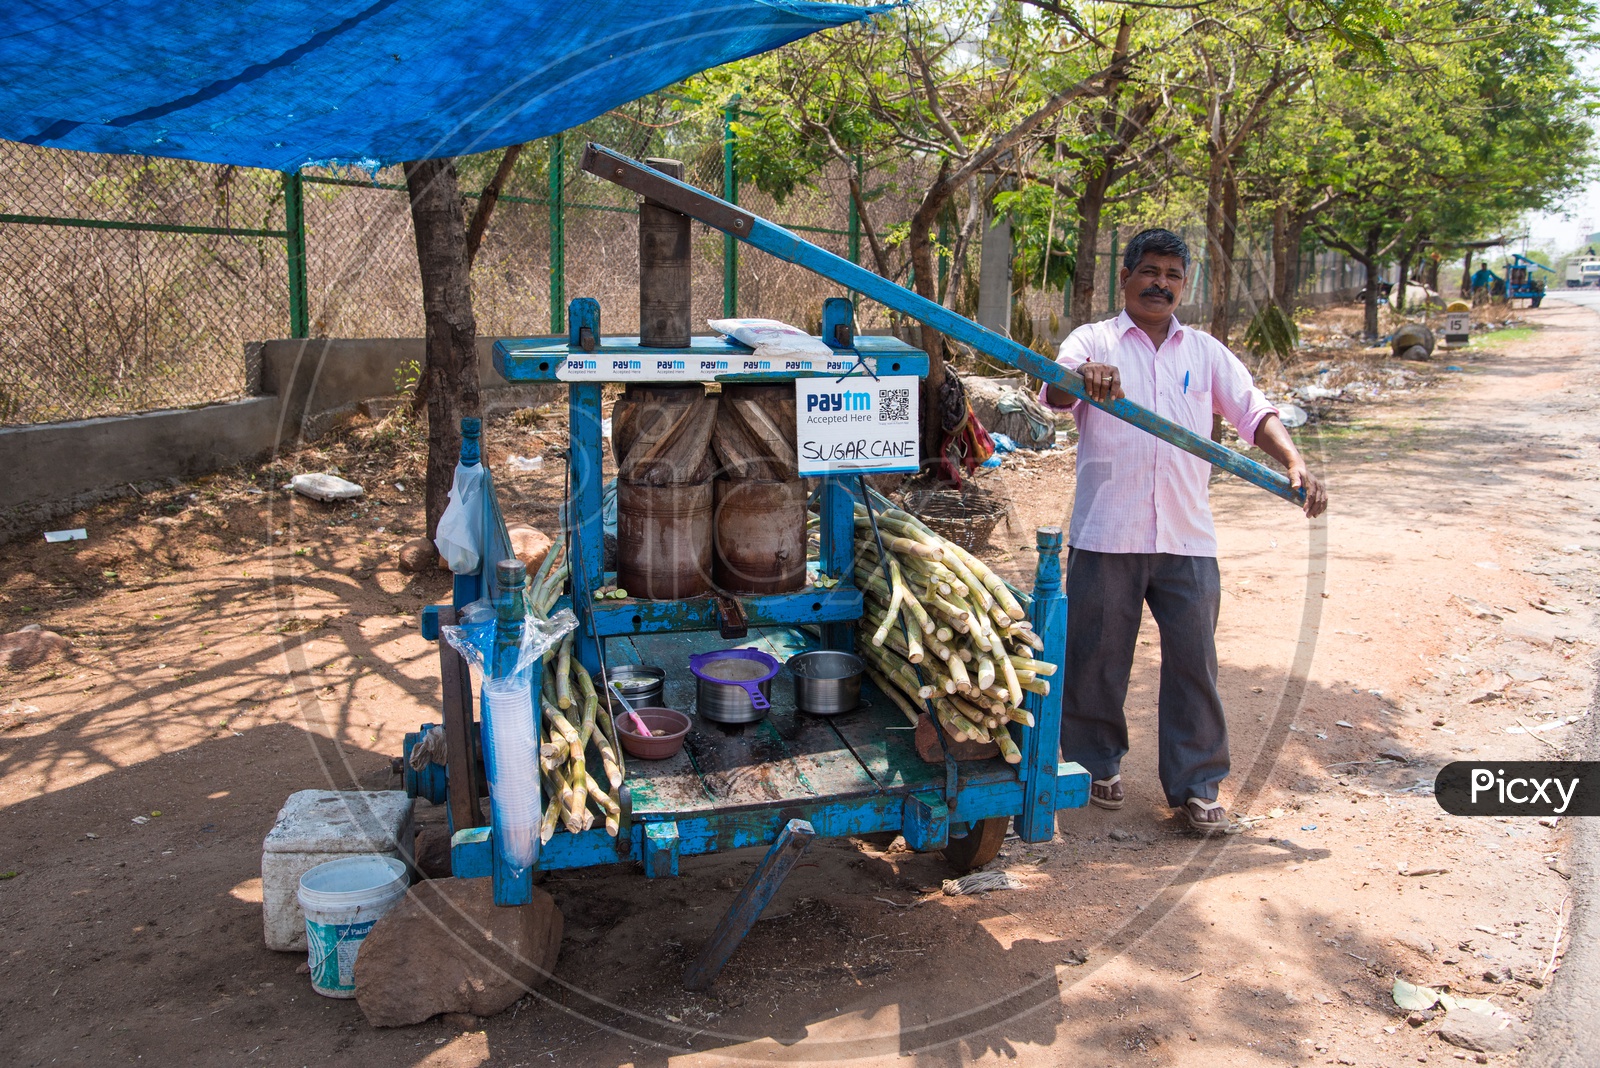 Sugarcane juice vendor accepting digital currency via Paytm